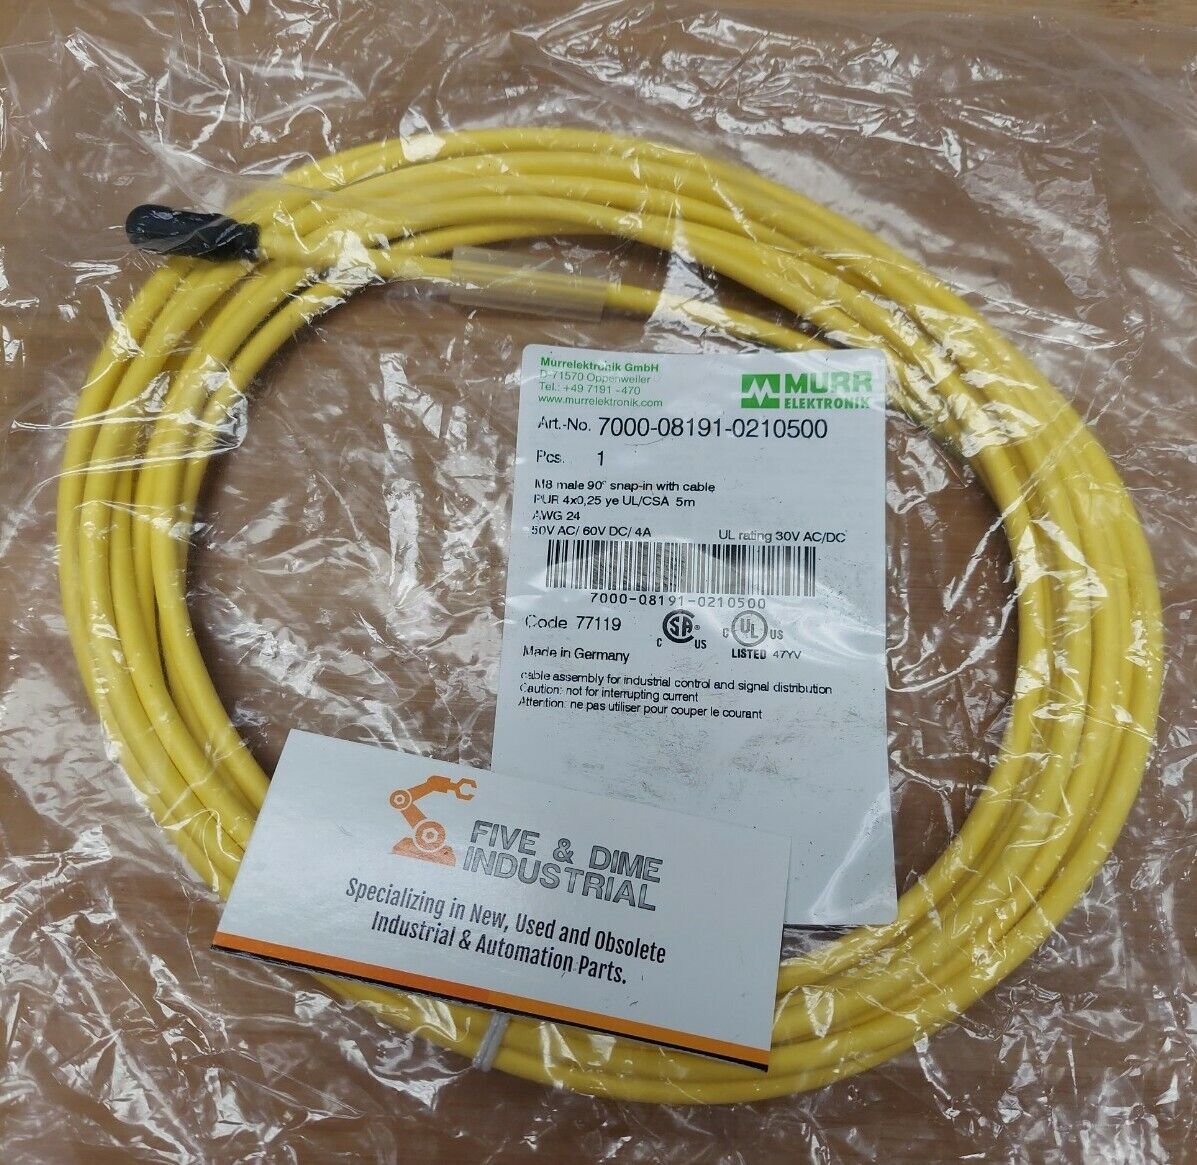 MURR Elektronik 7000-08191-0210500 New M8 Male 90° Snap-In-Cable  (CBL100)